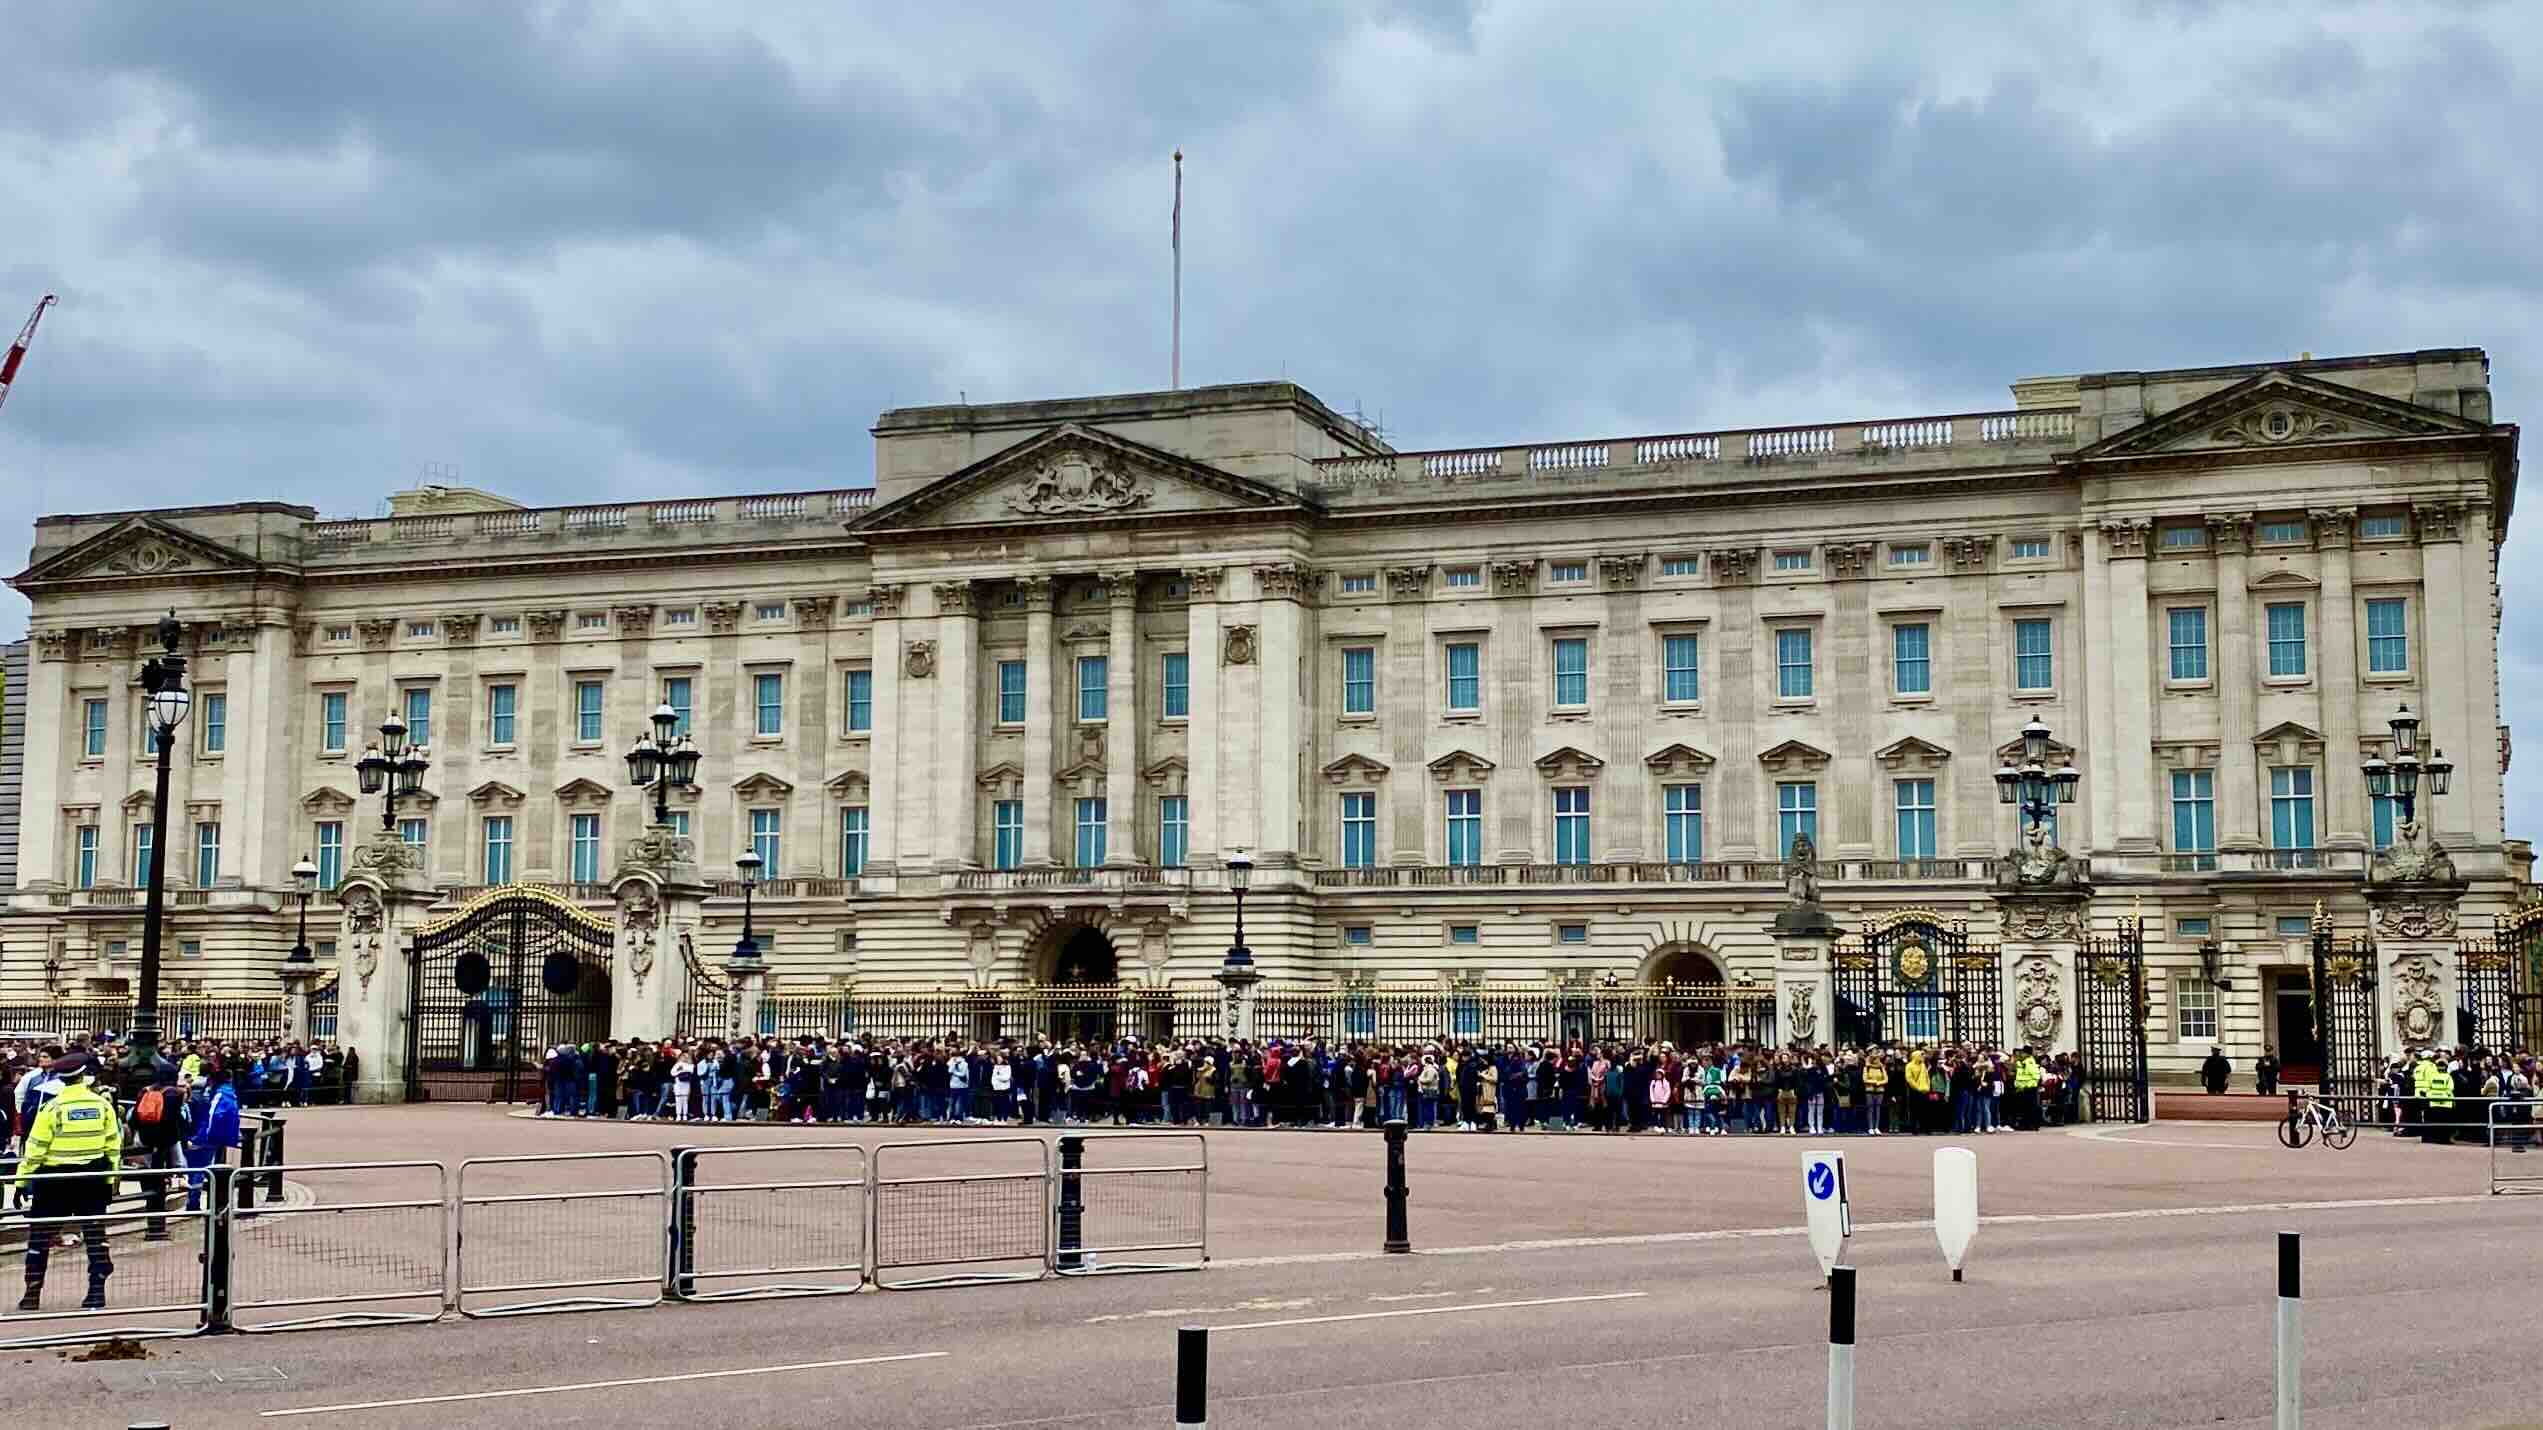 Buckingham Palace by Bryan Dearsley